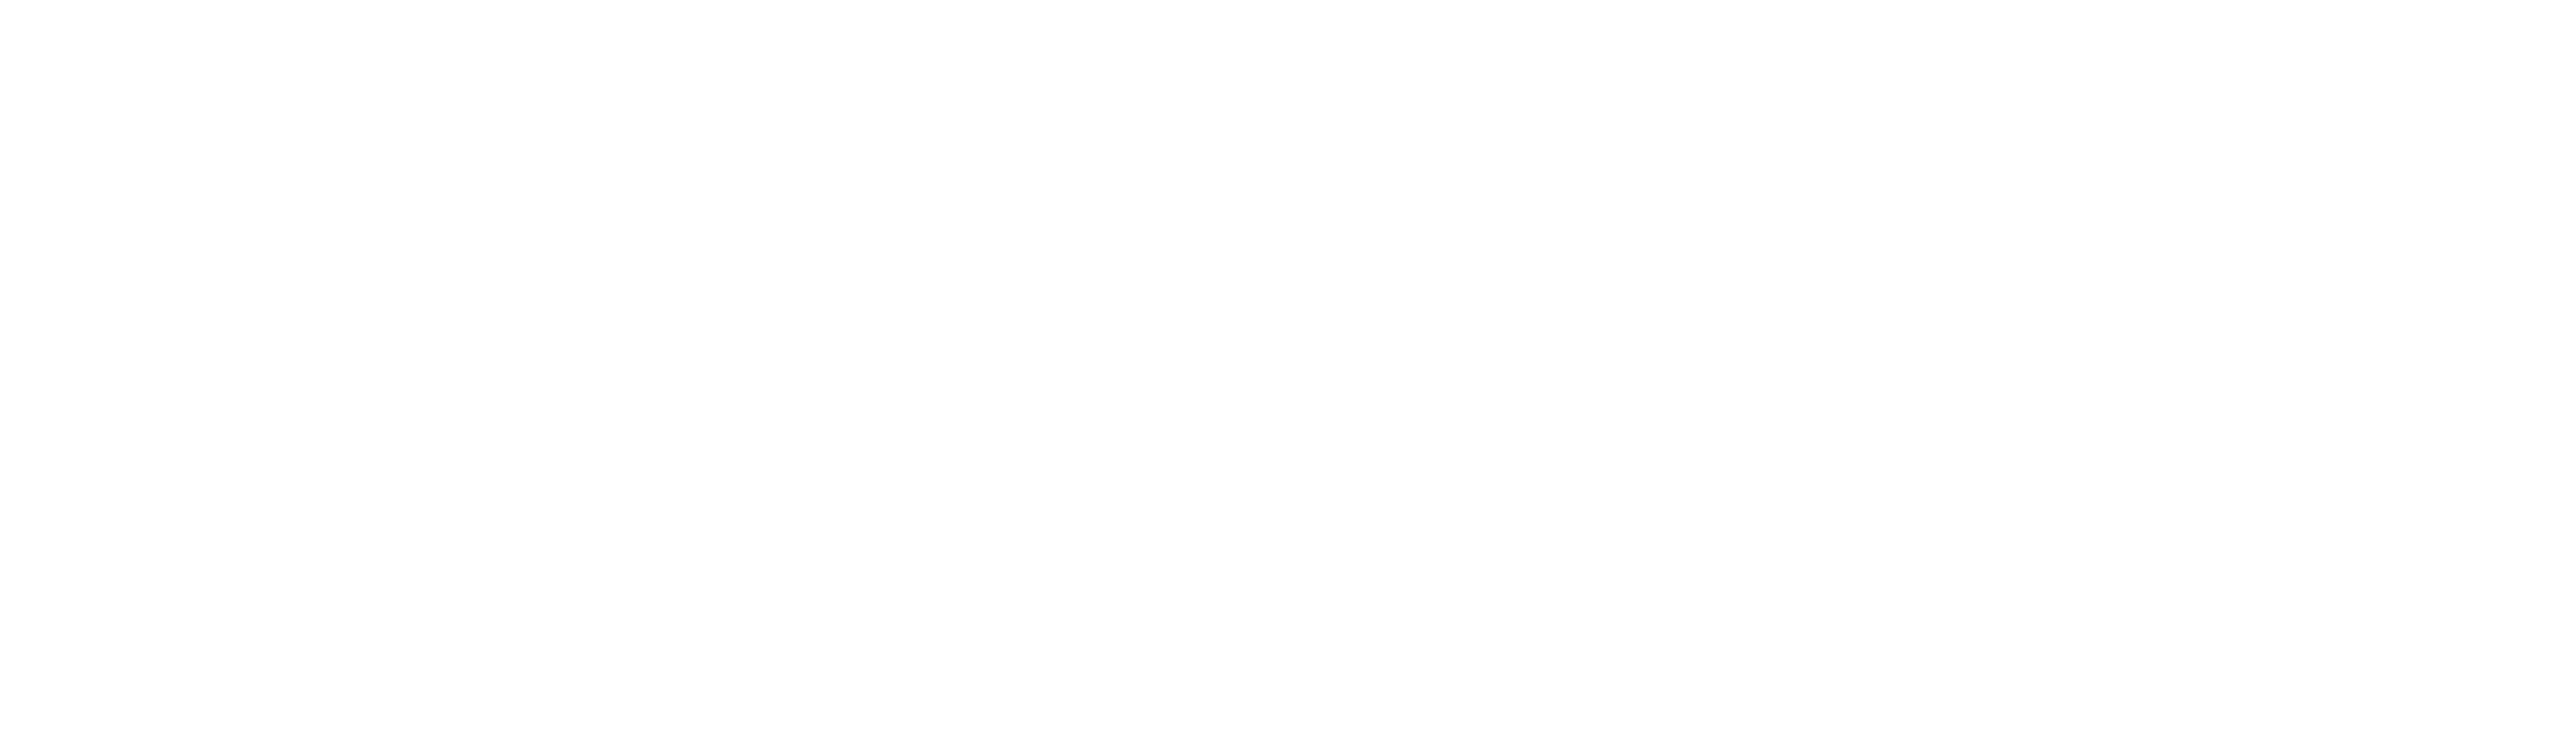 Low Light Combat